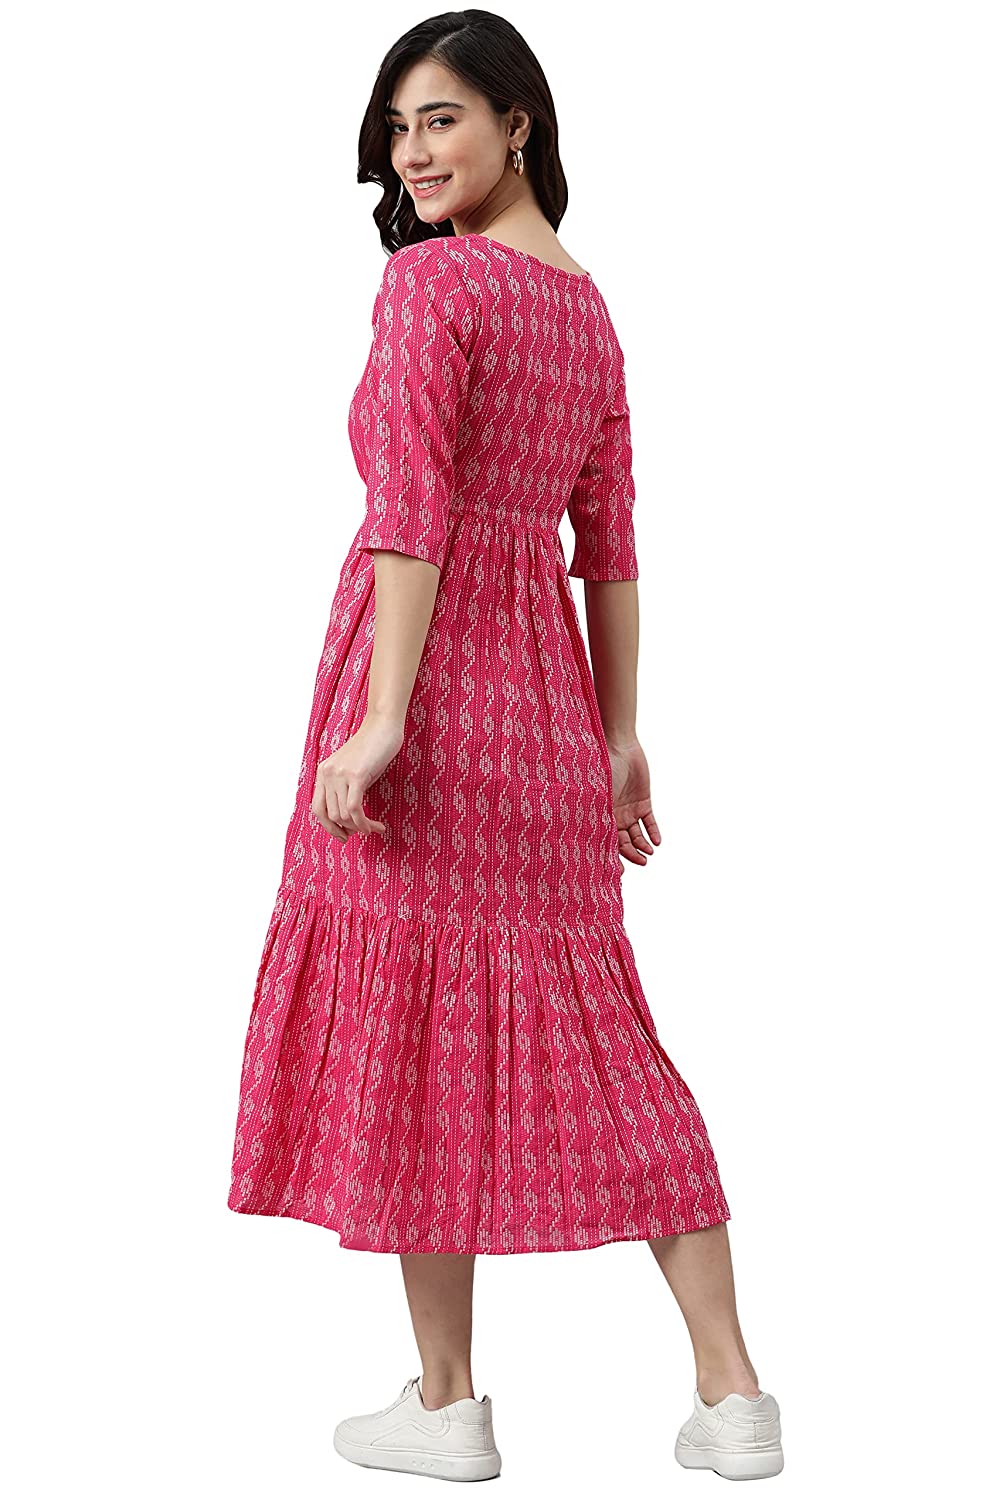 Janasya Women's Blue Woven Cotton Western Dress -  Dresses in Sri Lanka from Arcade Online Shopping - Just Rs. 6699!